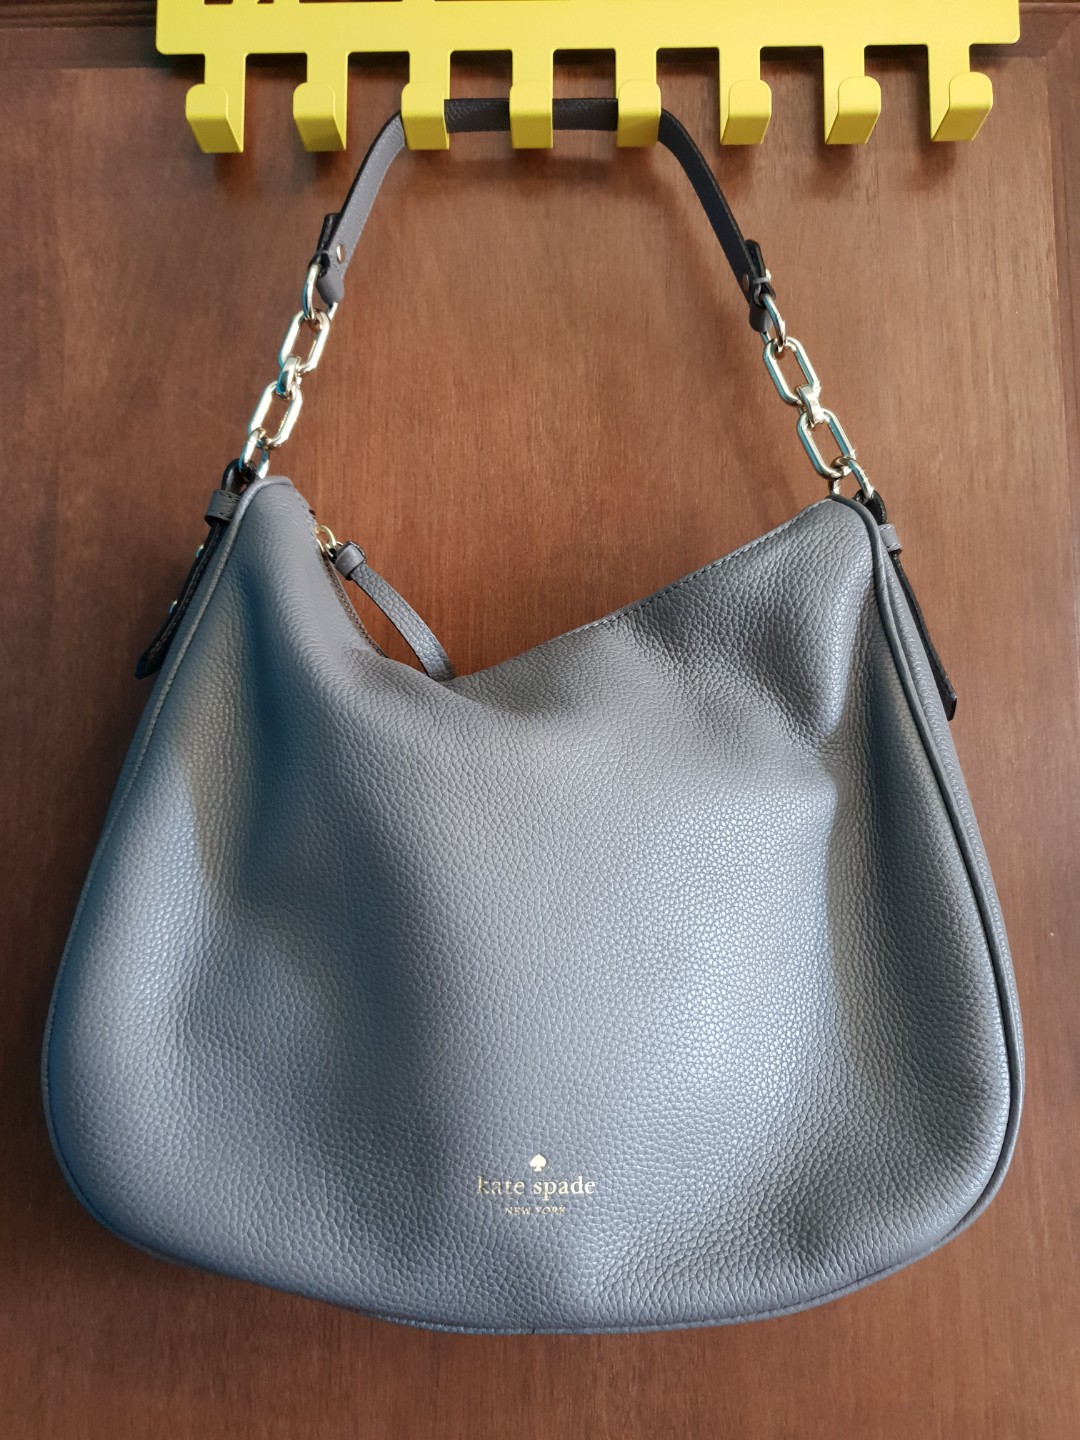 Kate Spade New York kate spade handbag for women Smoosh collection India |  Ubuy